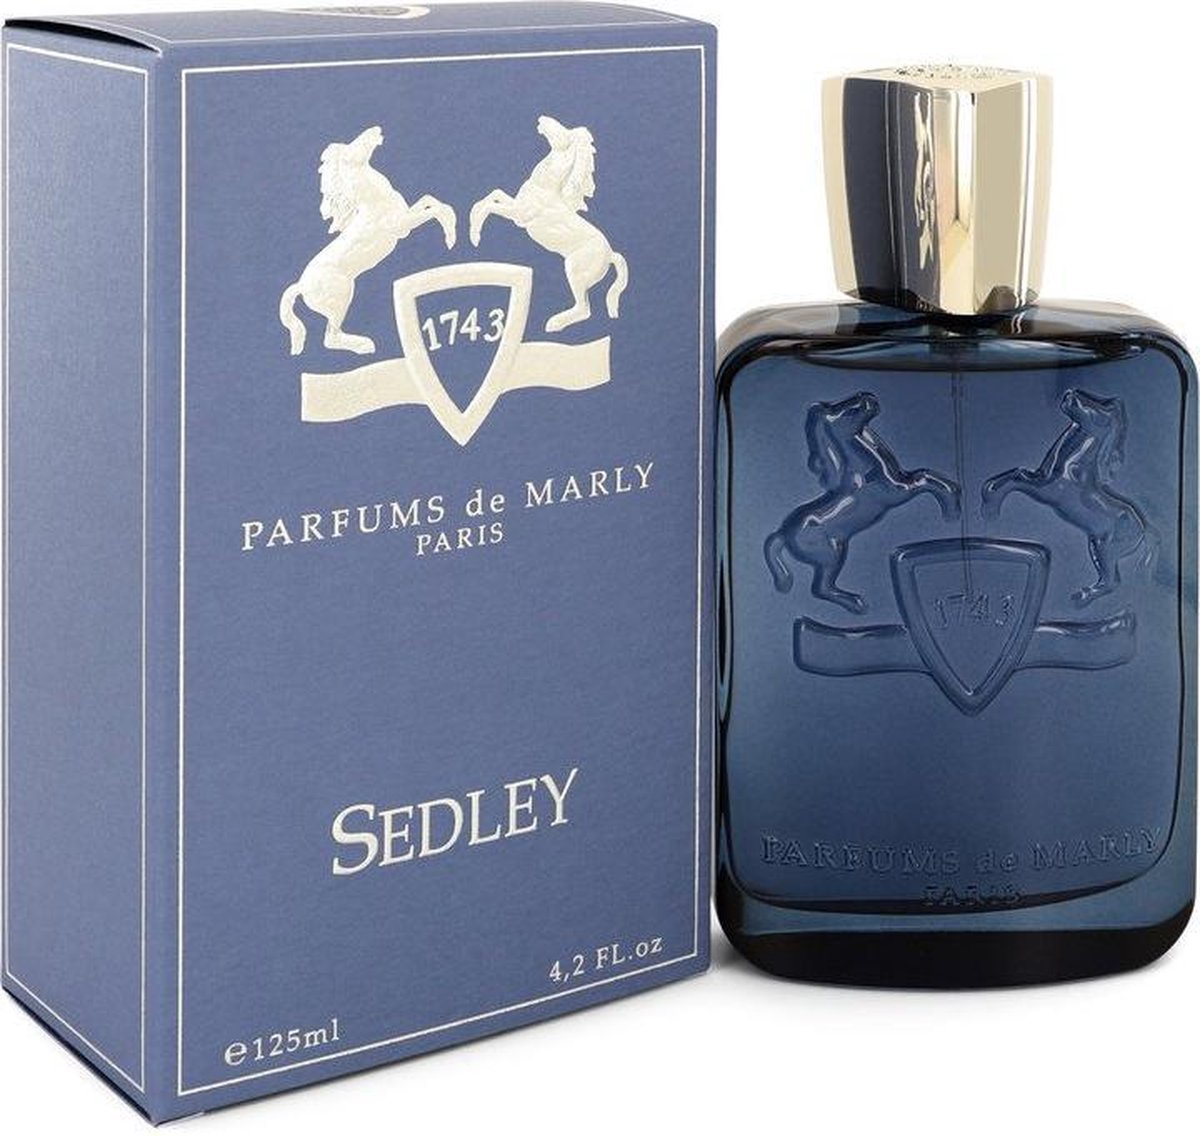 Parfums de Marly Sedley Eau de parfum vaporisateur 125 ml | bol.com